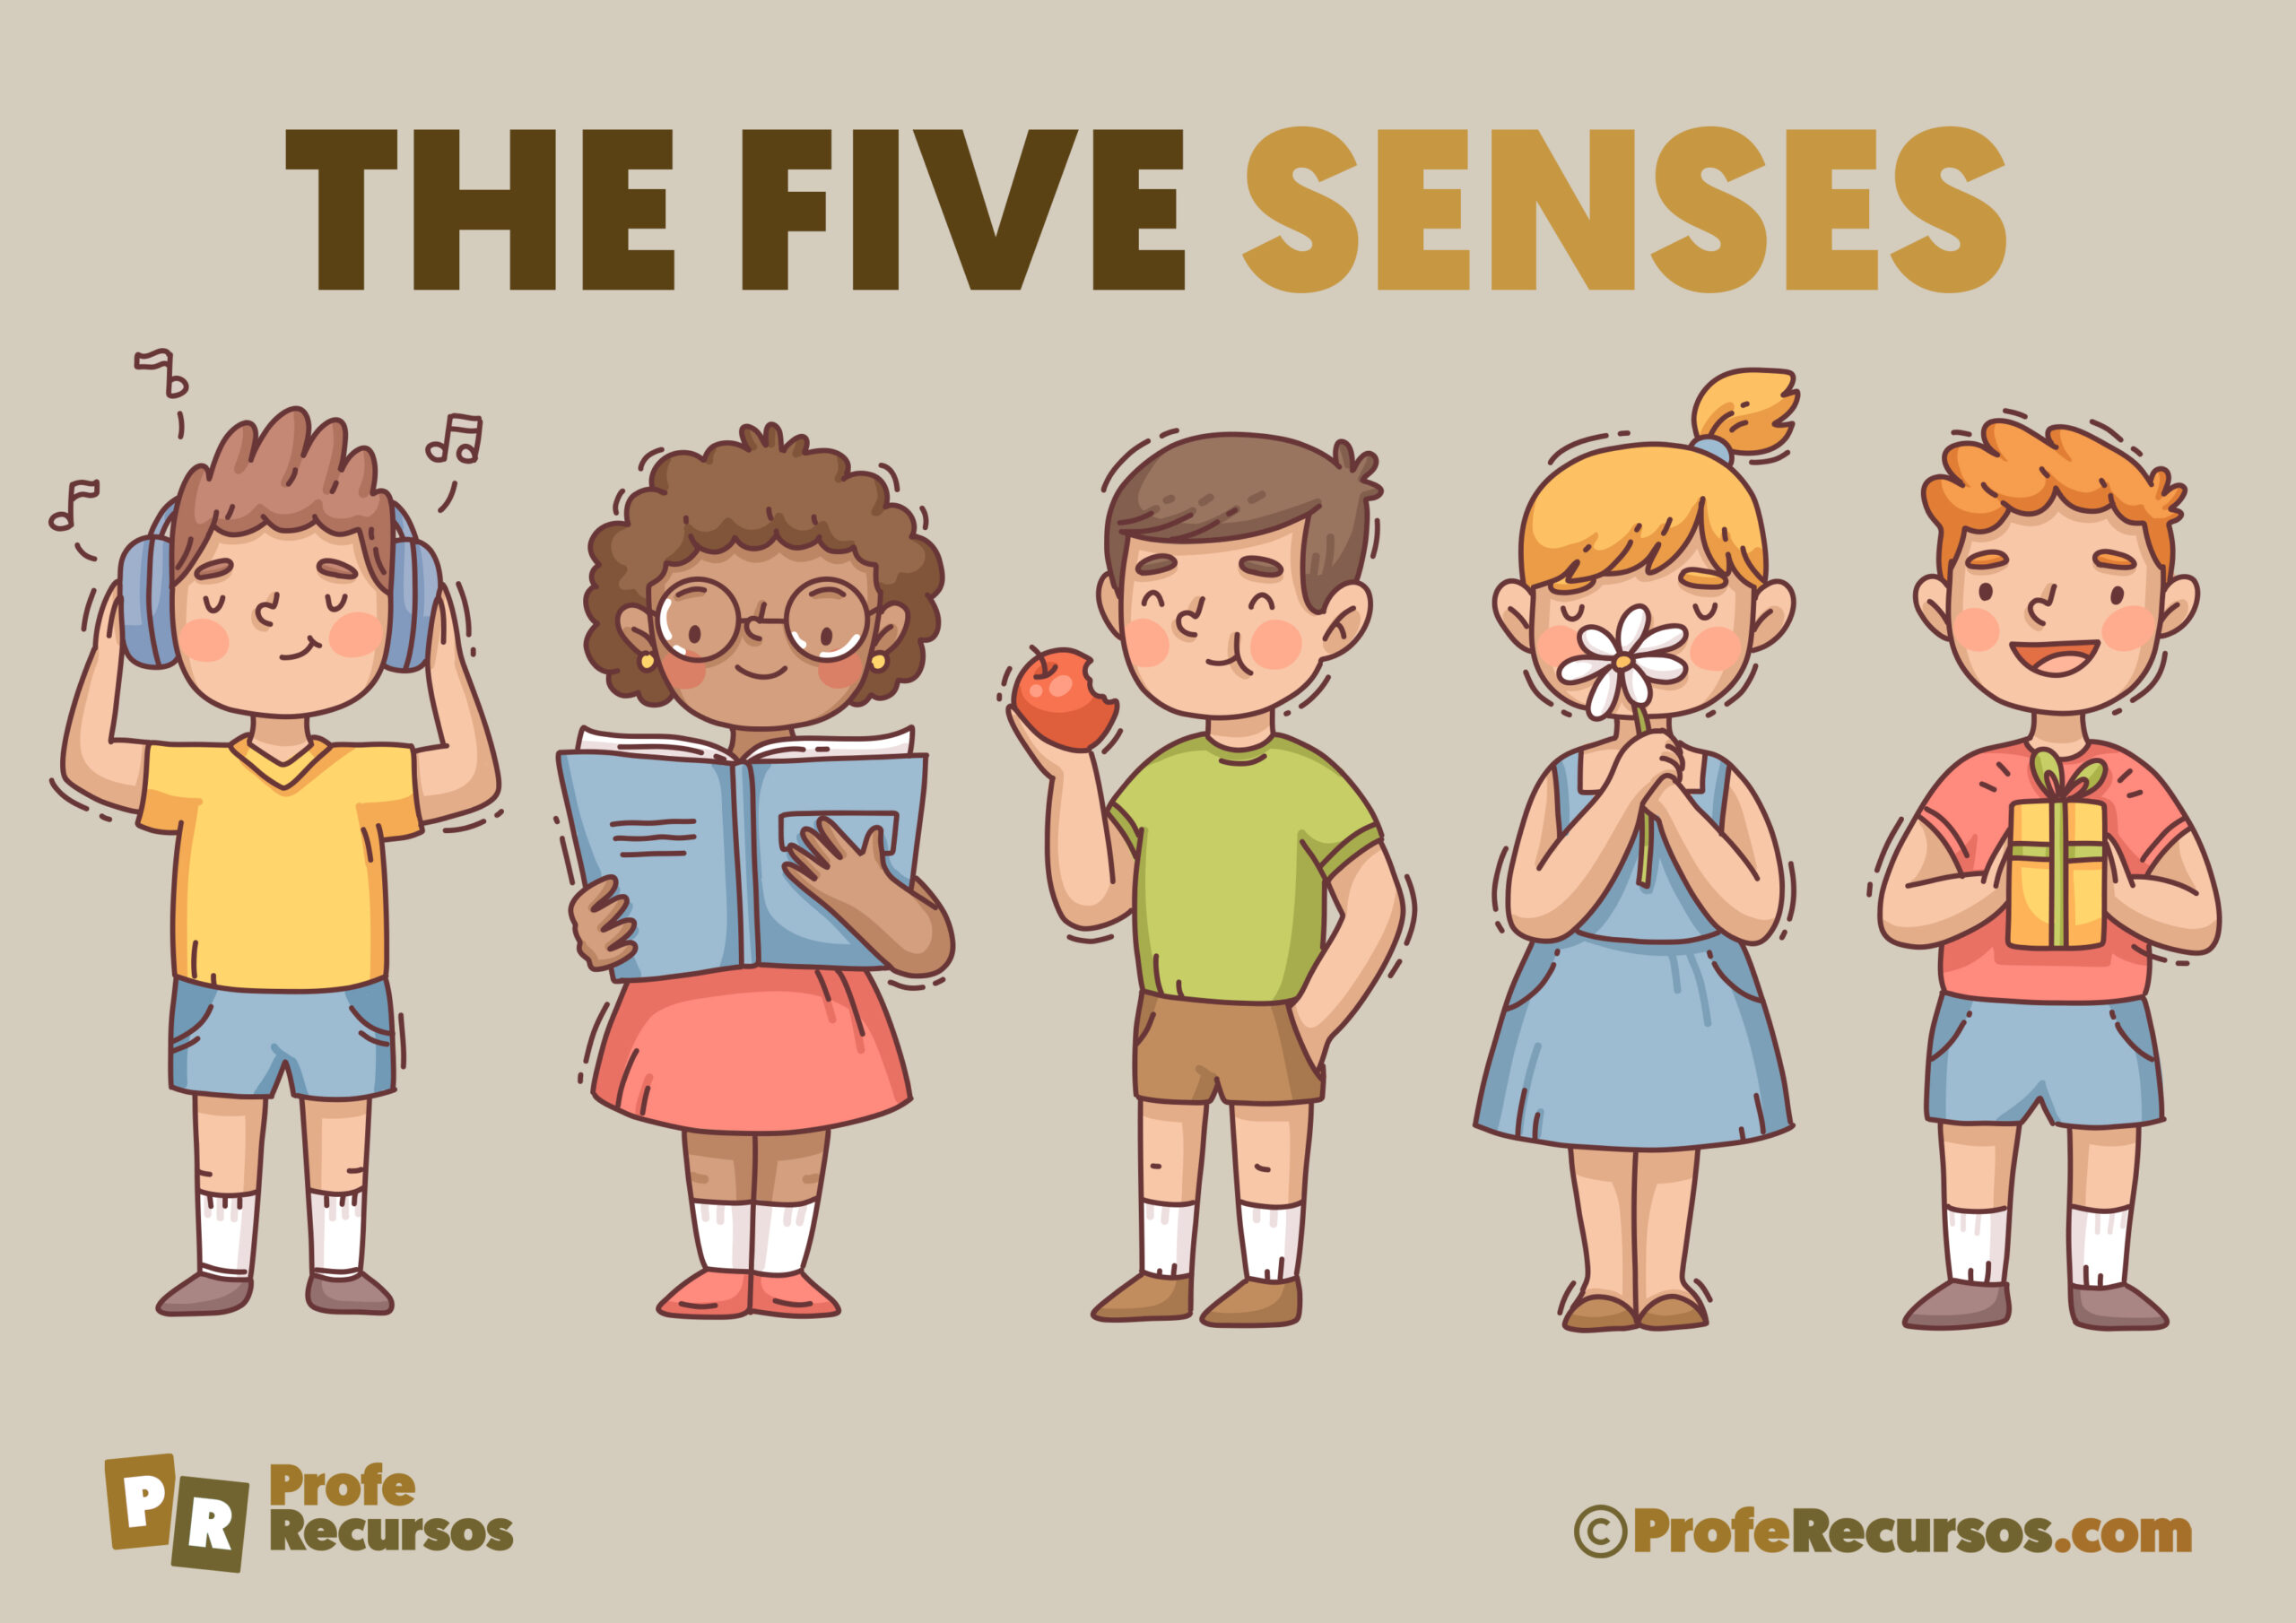 The five senses for kids